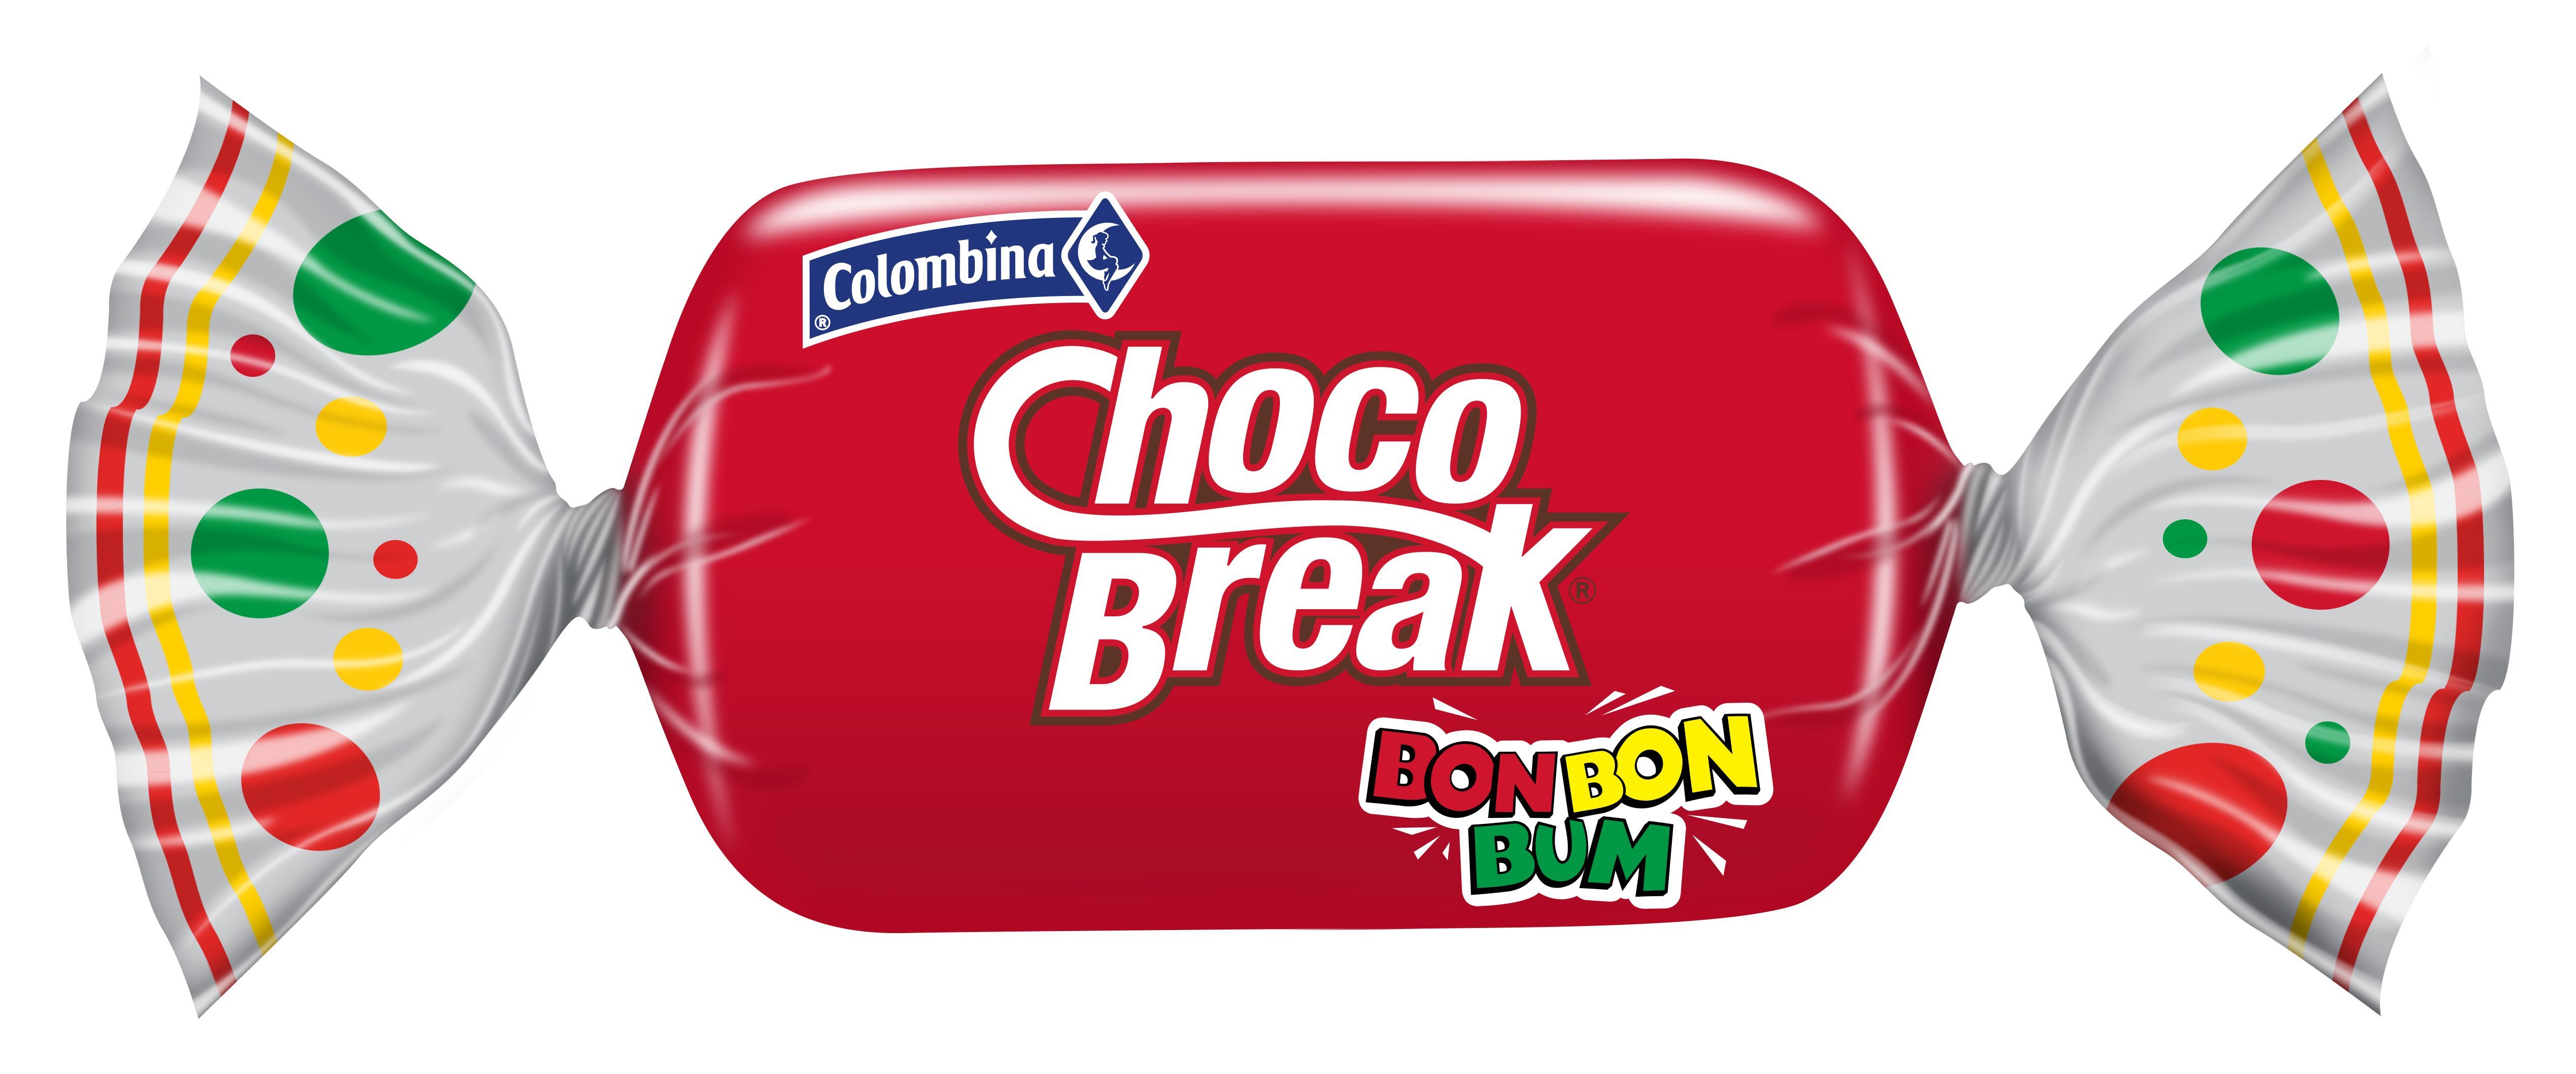 2 iconic Colombina flavors in 1 bite! Choco Break with a Bon Bon Bum Red-lollipop Flavored Center.